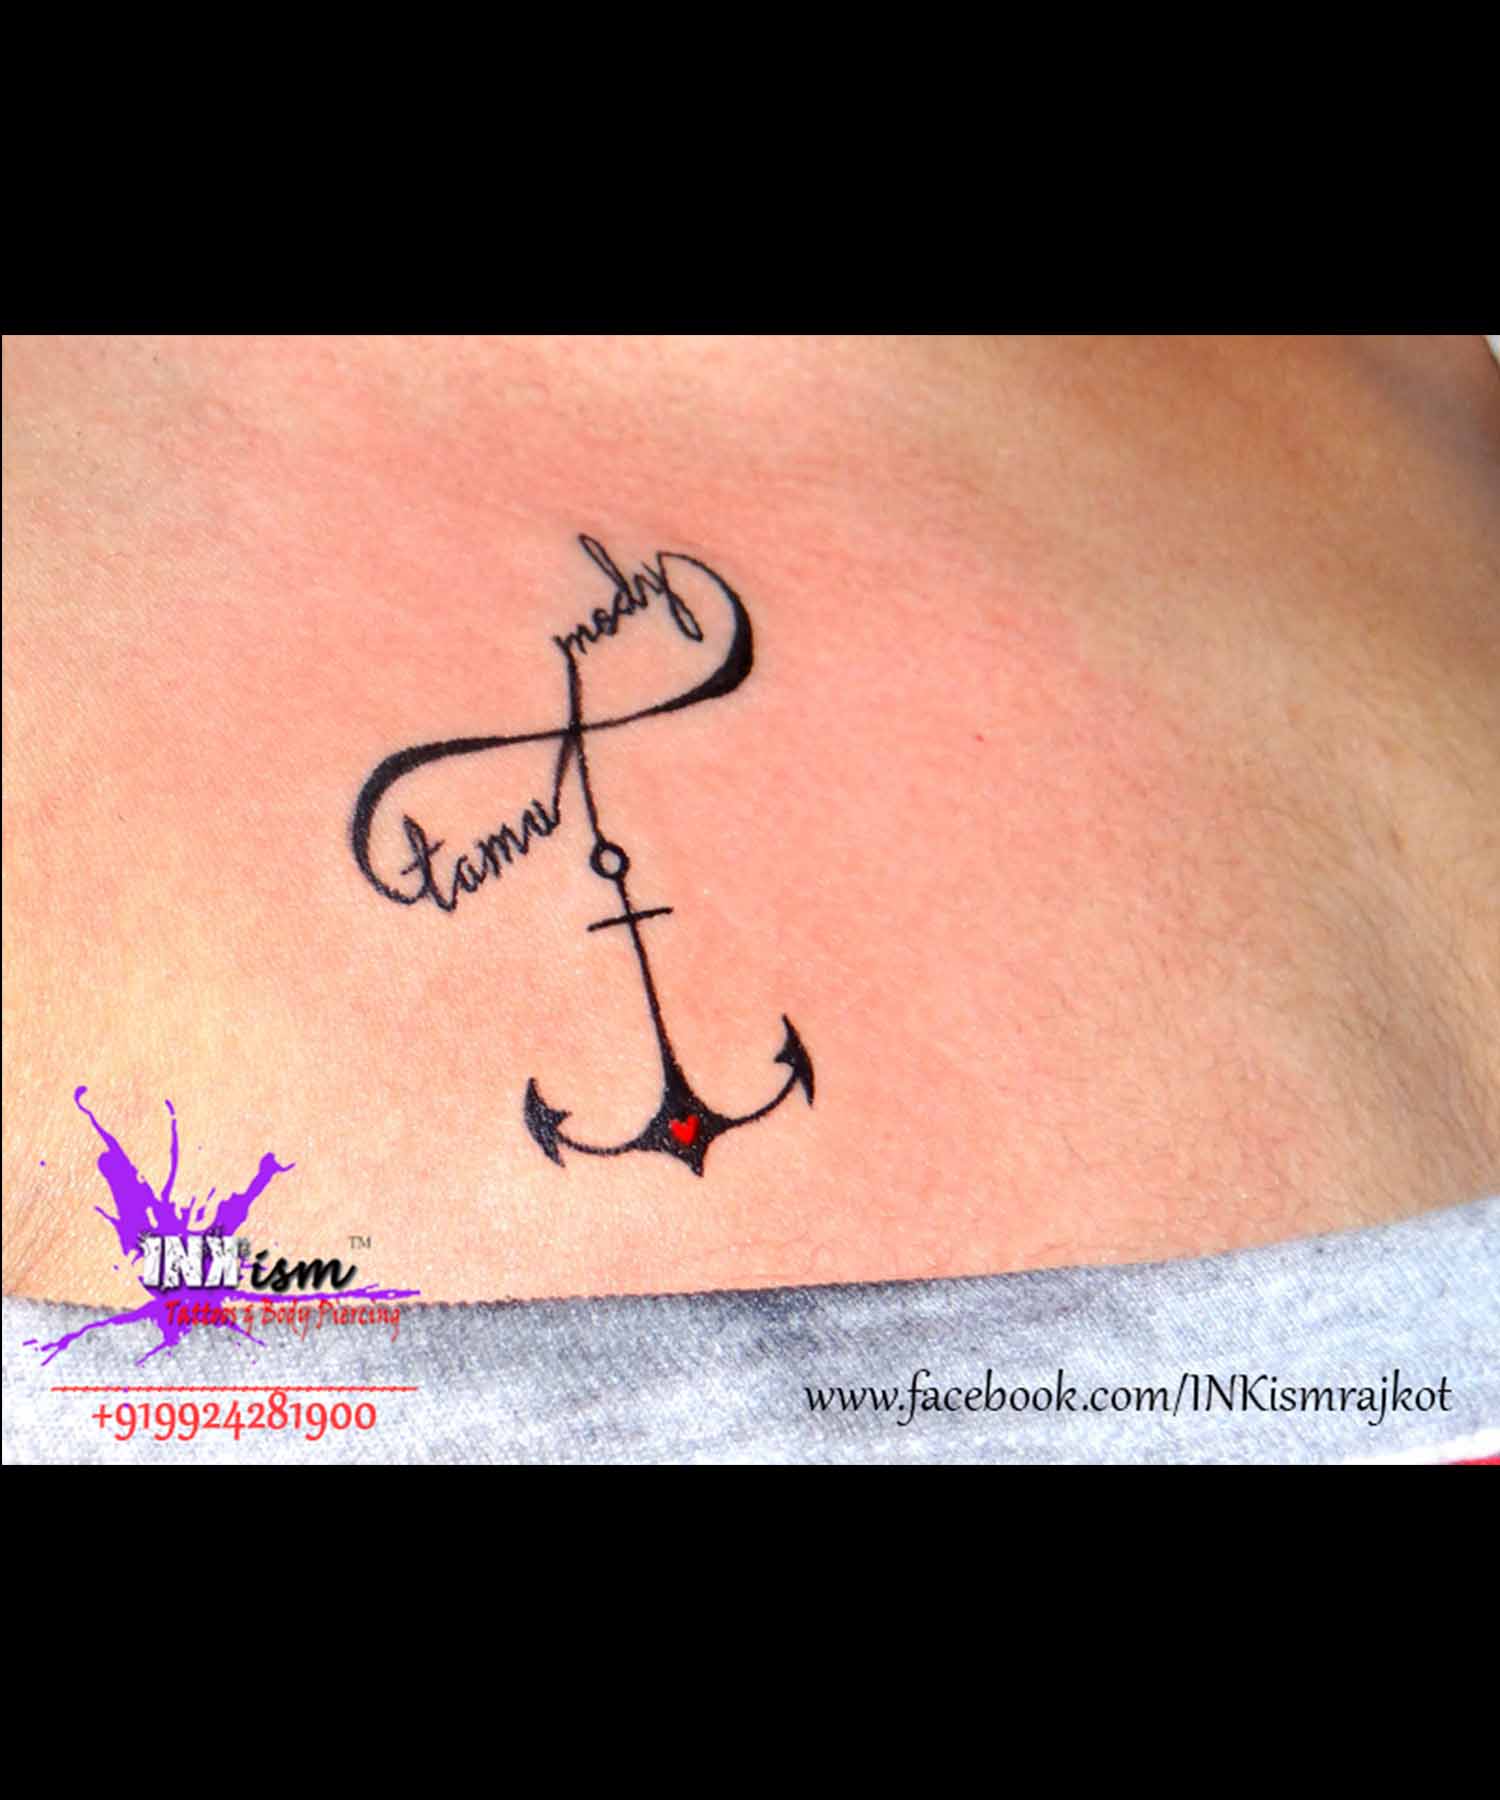 Anchor with infinity tattoo, Infinity tattoo, Anchor tattoo, Heart Tattoo, Chest Tattoo, calligraphy tattoo, Inkism tattoo and body piercing rajkot gujarat